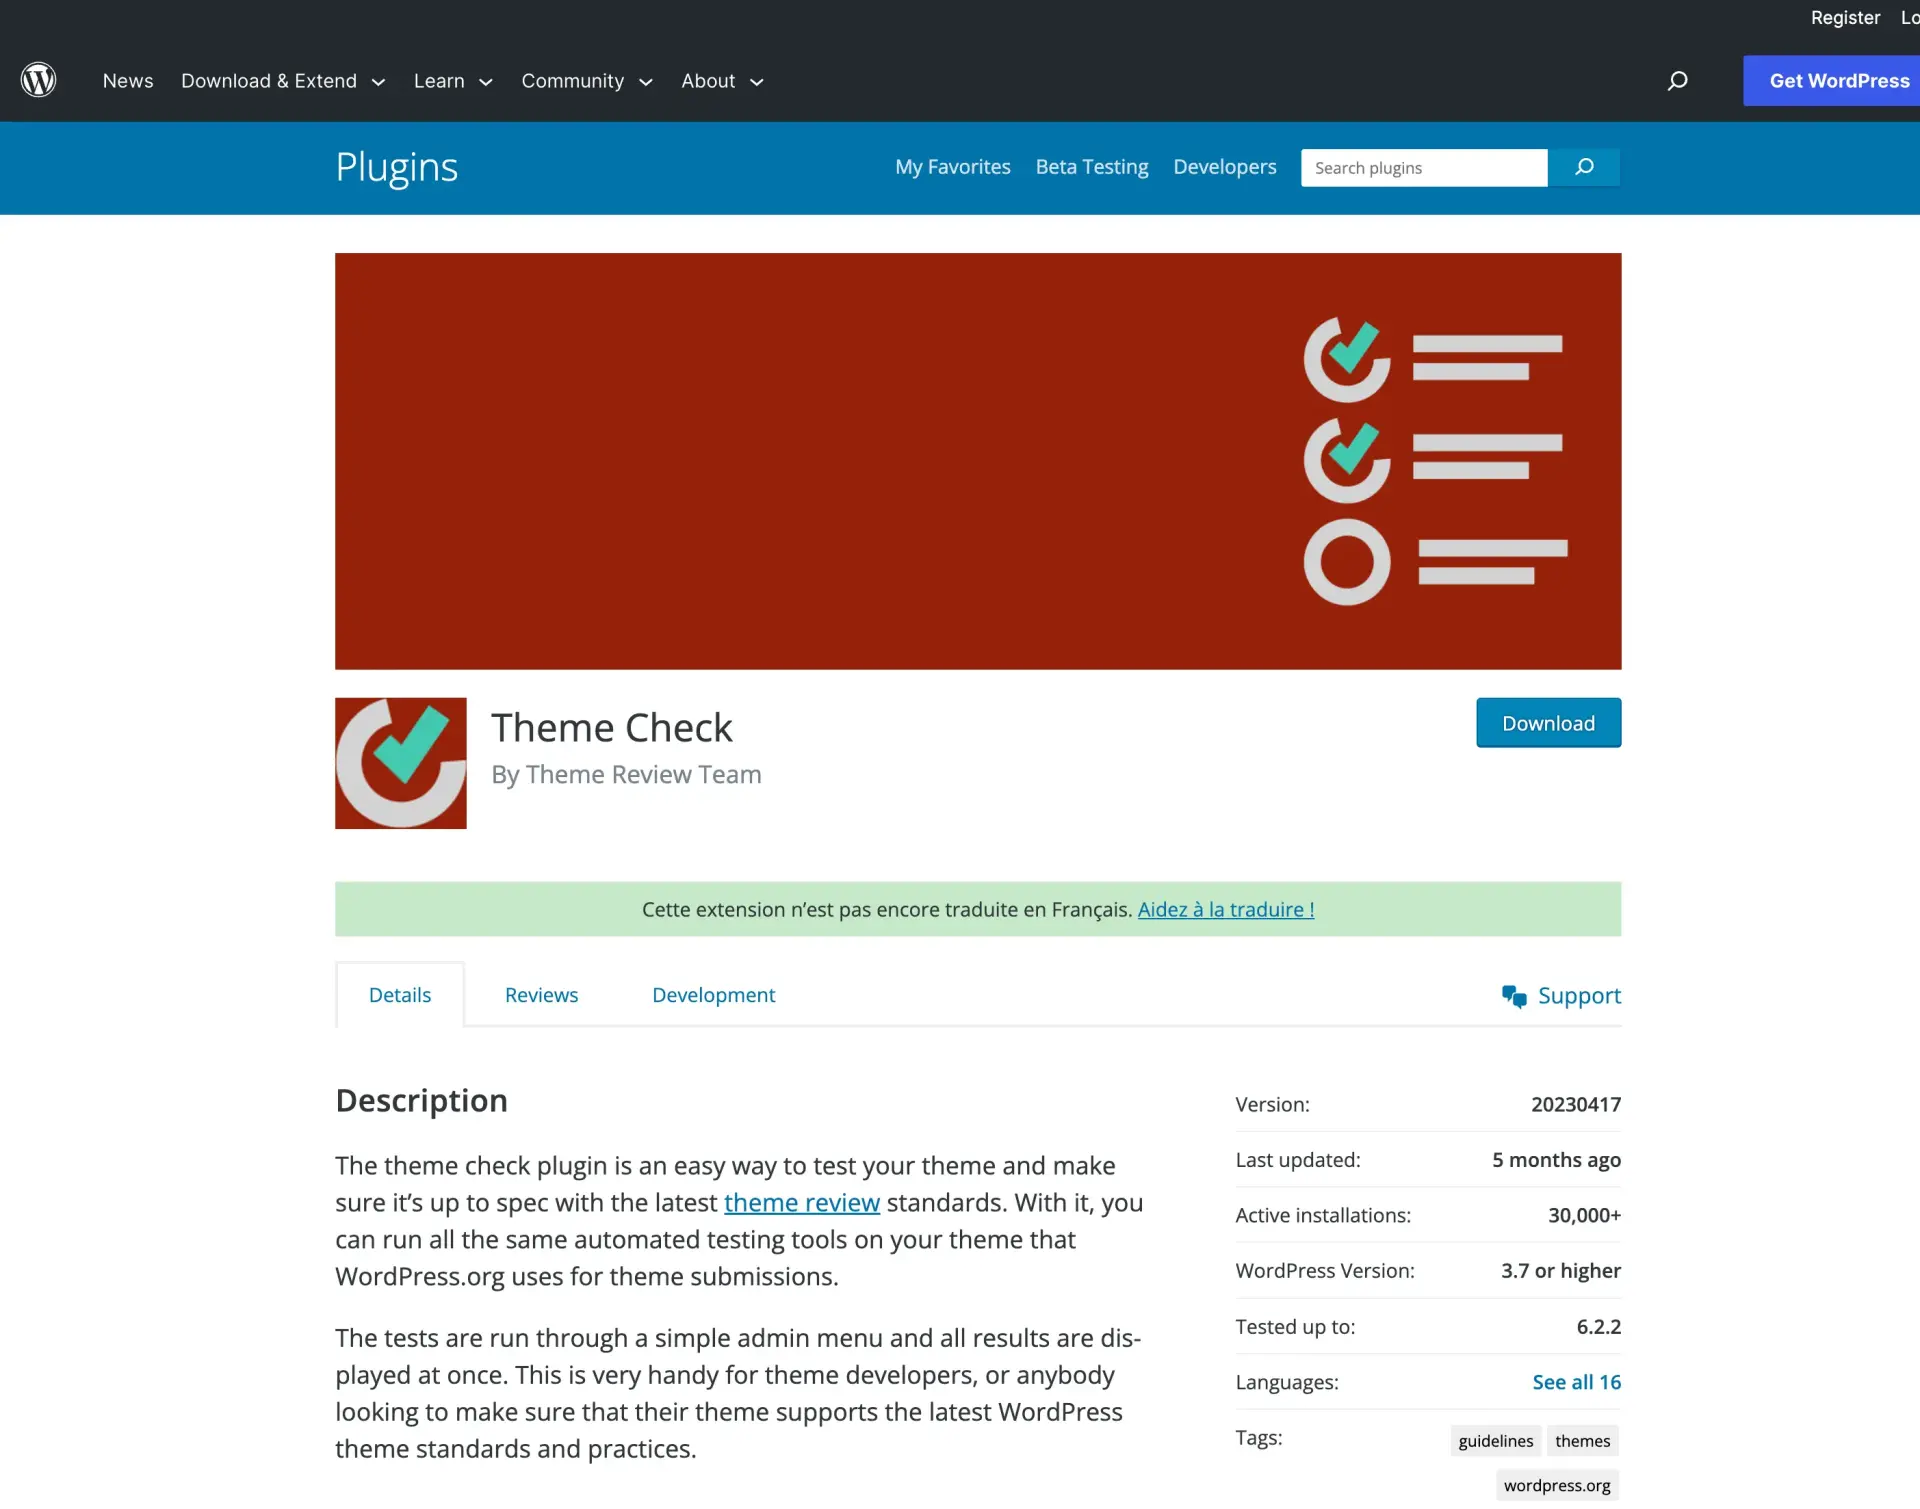 Theme check ressource developpement wordpress